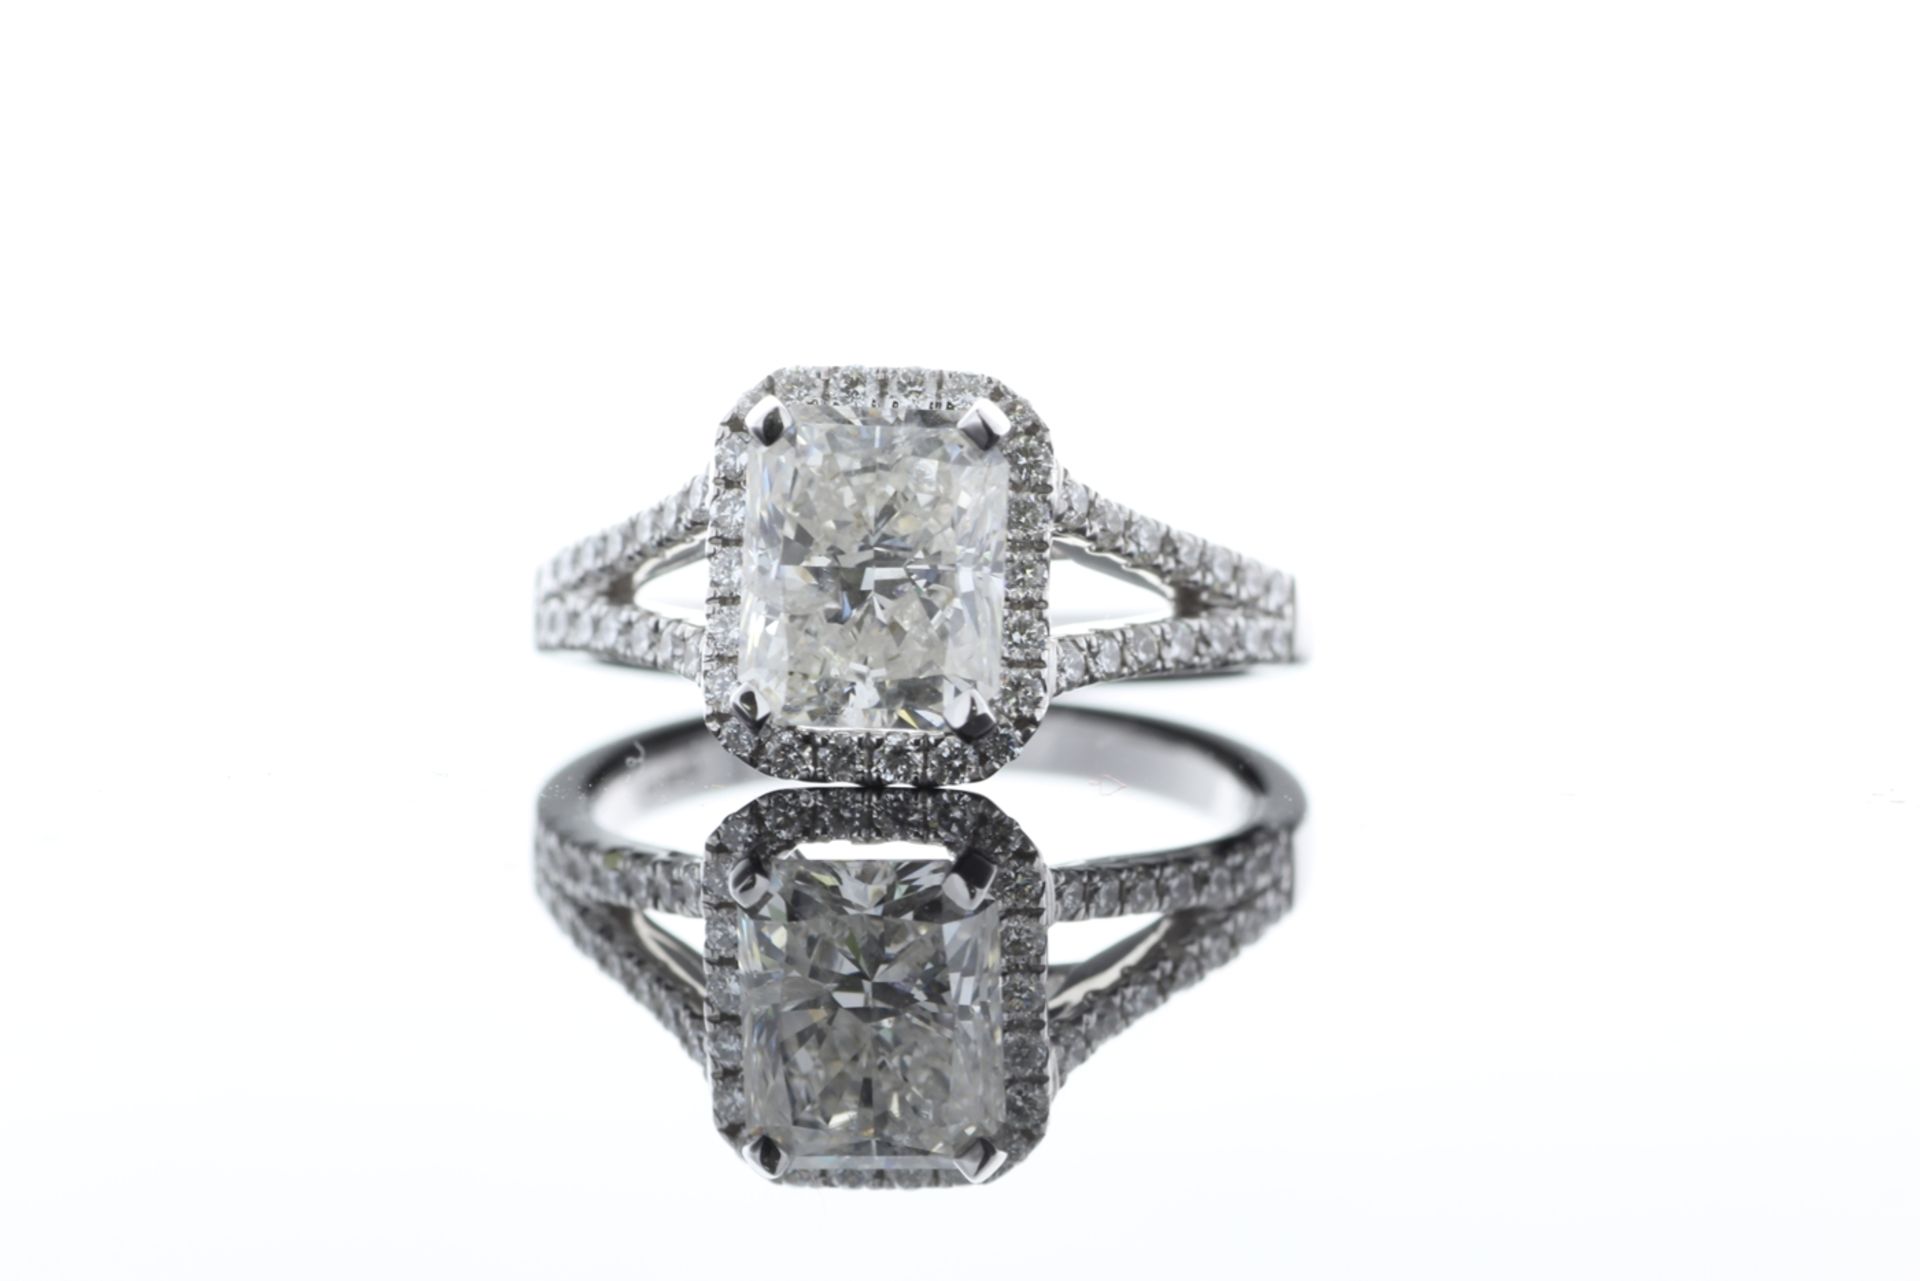 18ct White Gold Single Stone Radiant Cut Diamond With Halo Setting Ring 2.51 (2.01) - Image 4 of 73